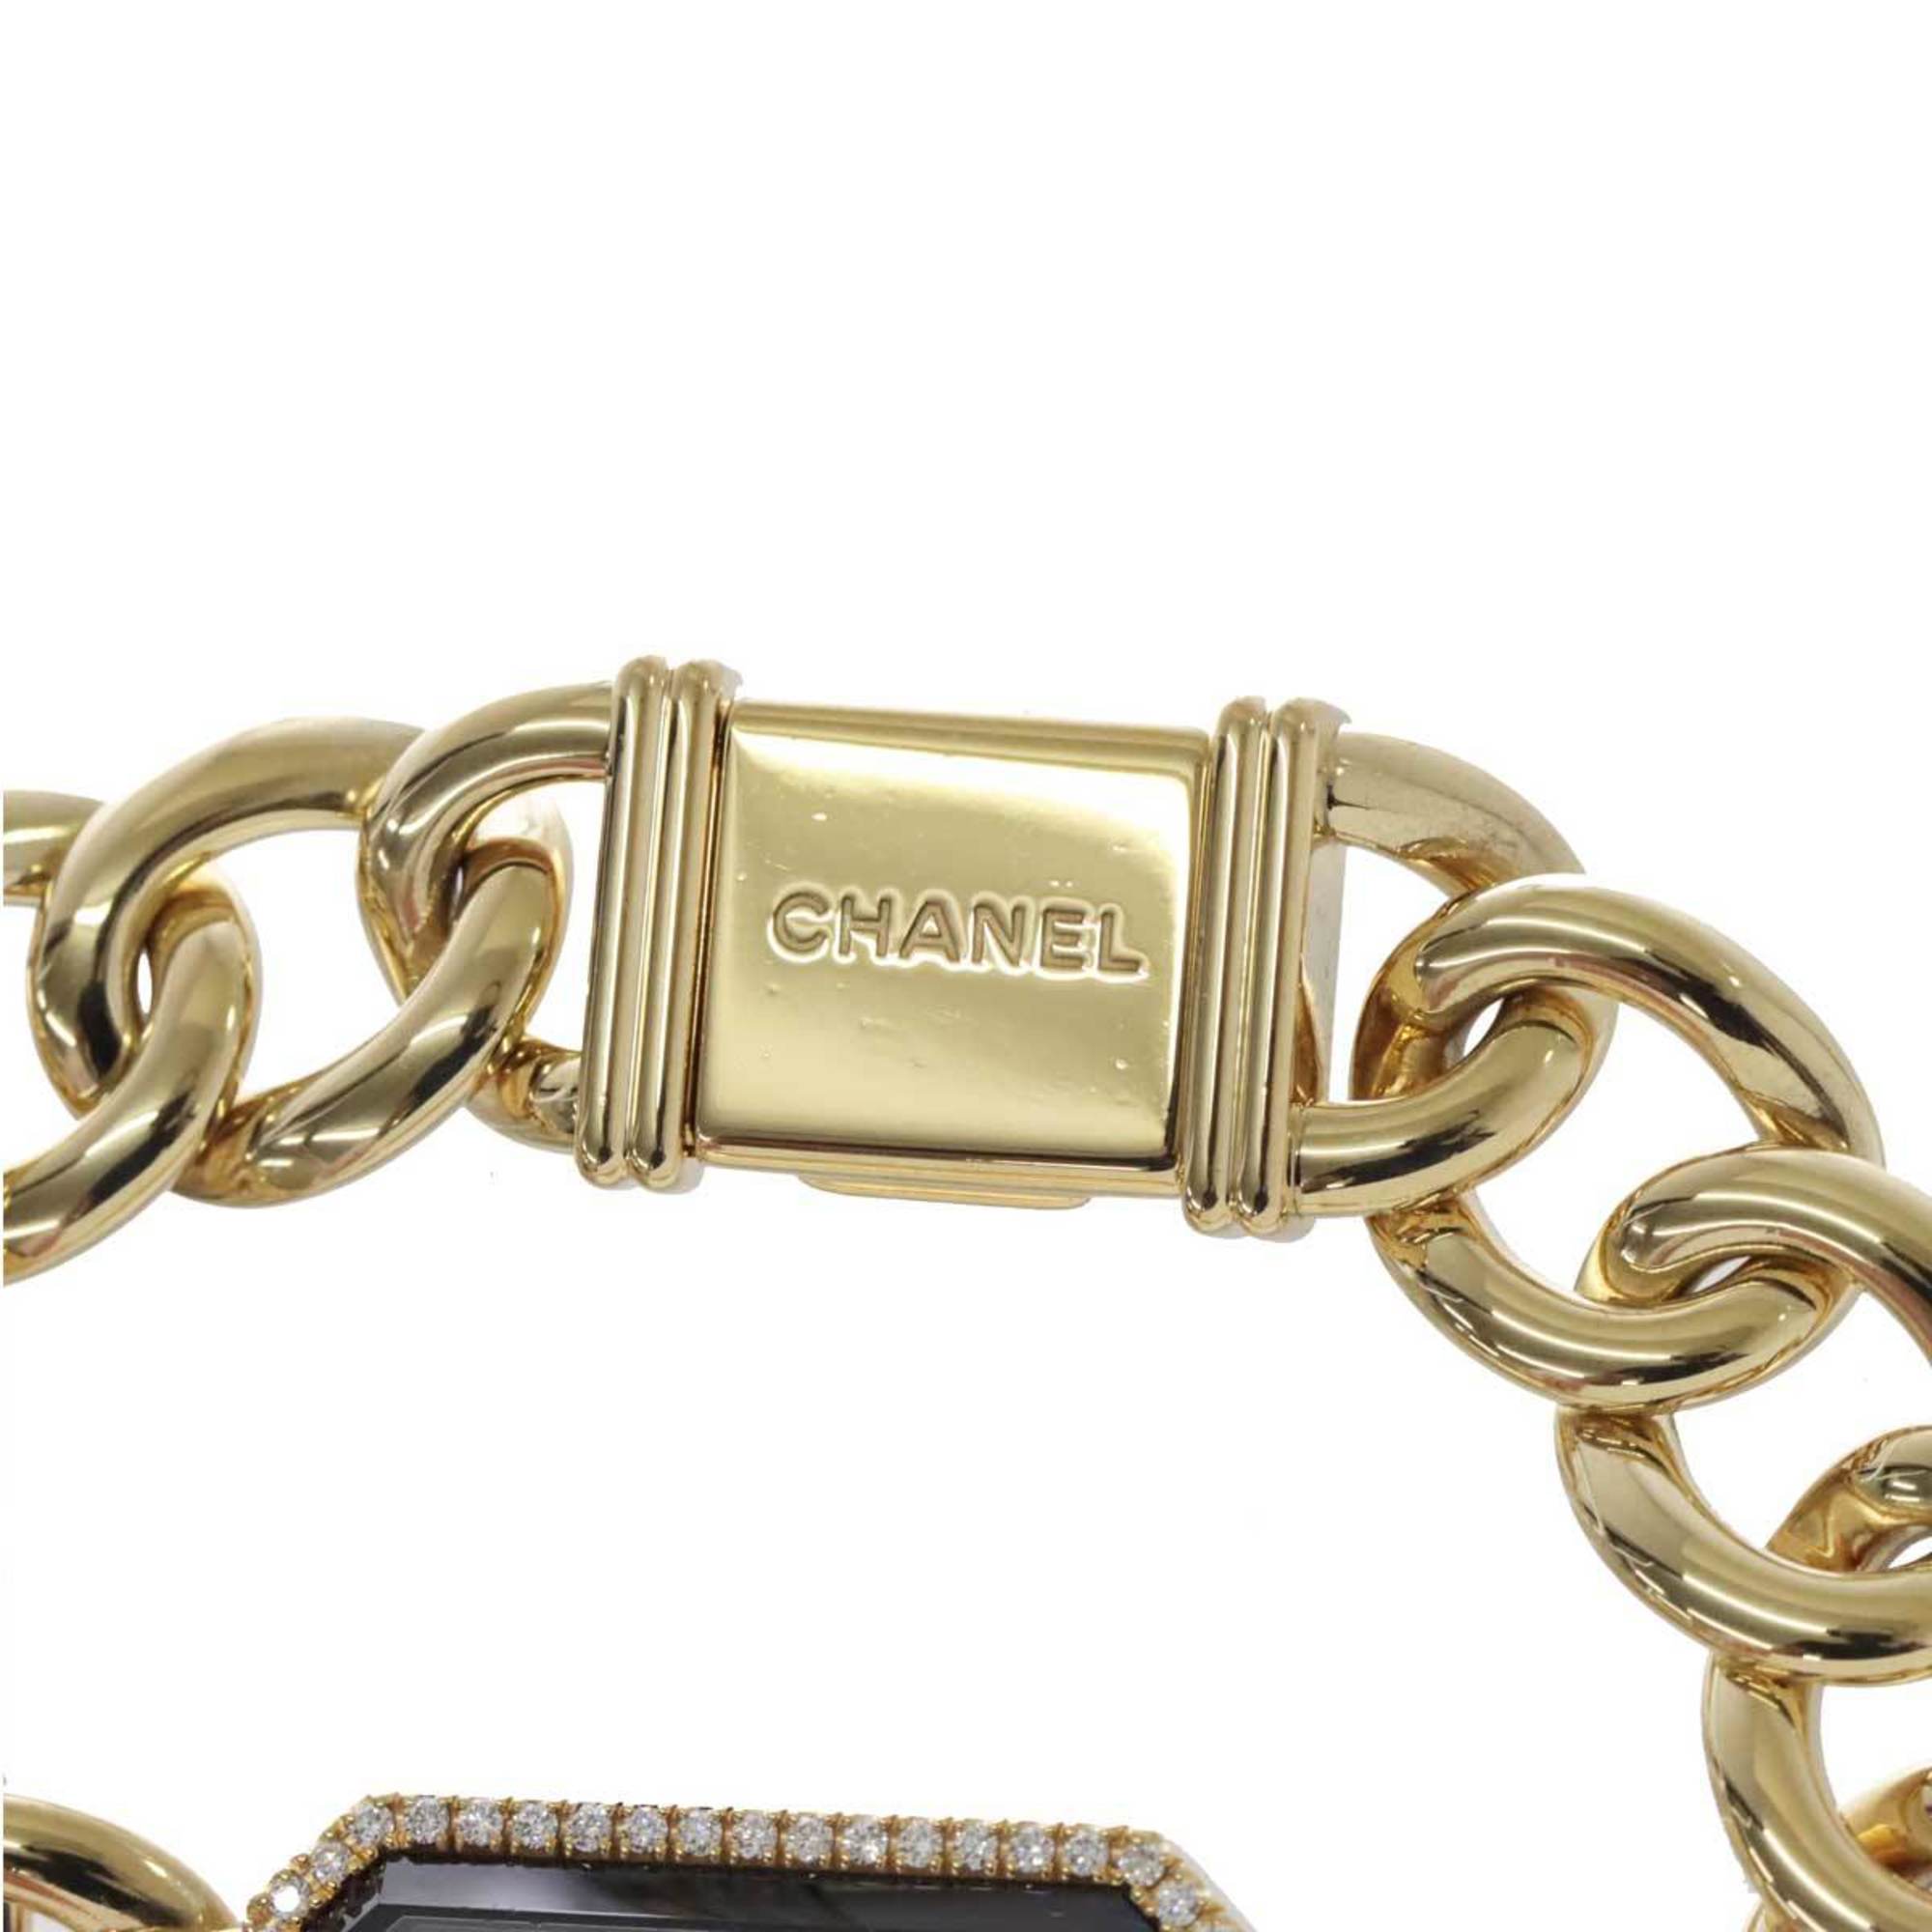 Chanel CHAMEL Premiere H3259 Ladies Watch Diamond Bezel Black Dial K18YG Yellow Gold Quartz